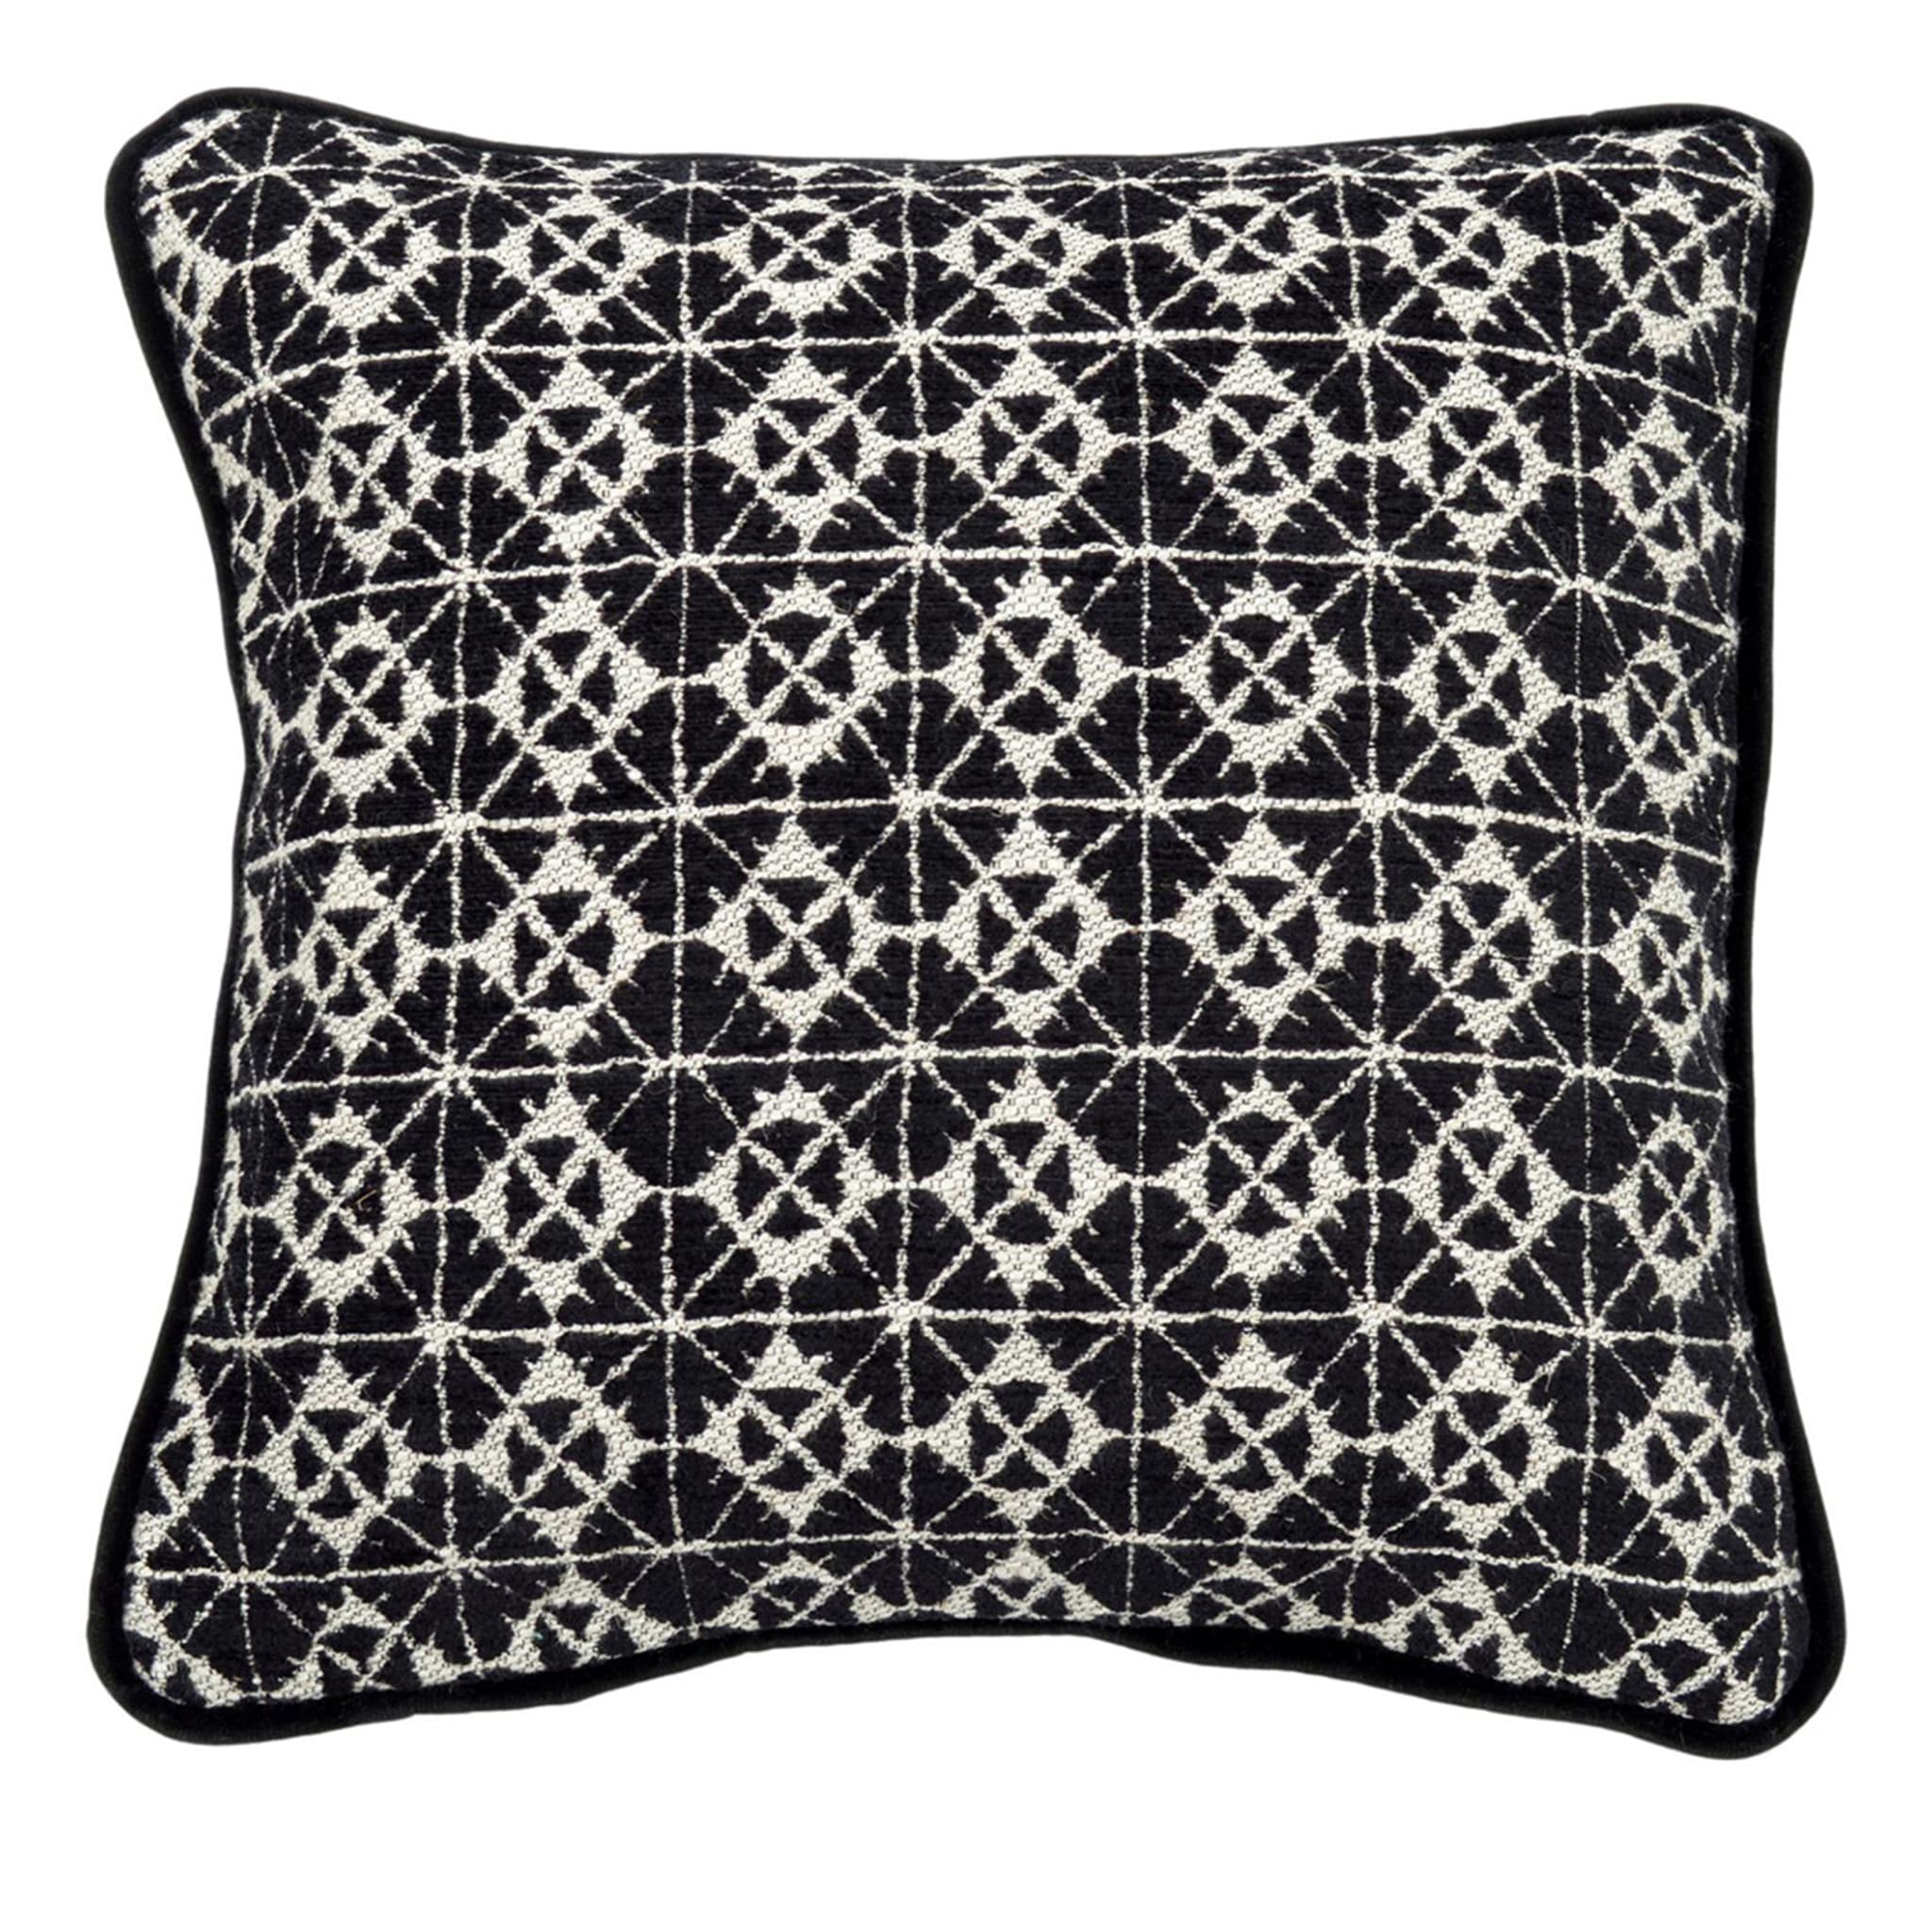 Black and White Square Carrè Cushion in geometric jacquard fabric - Main view